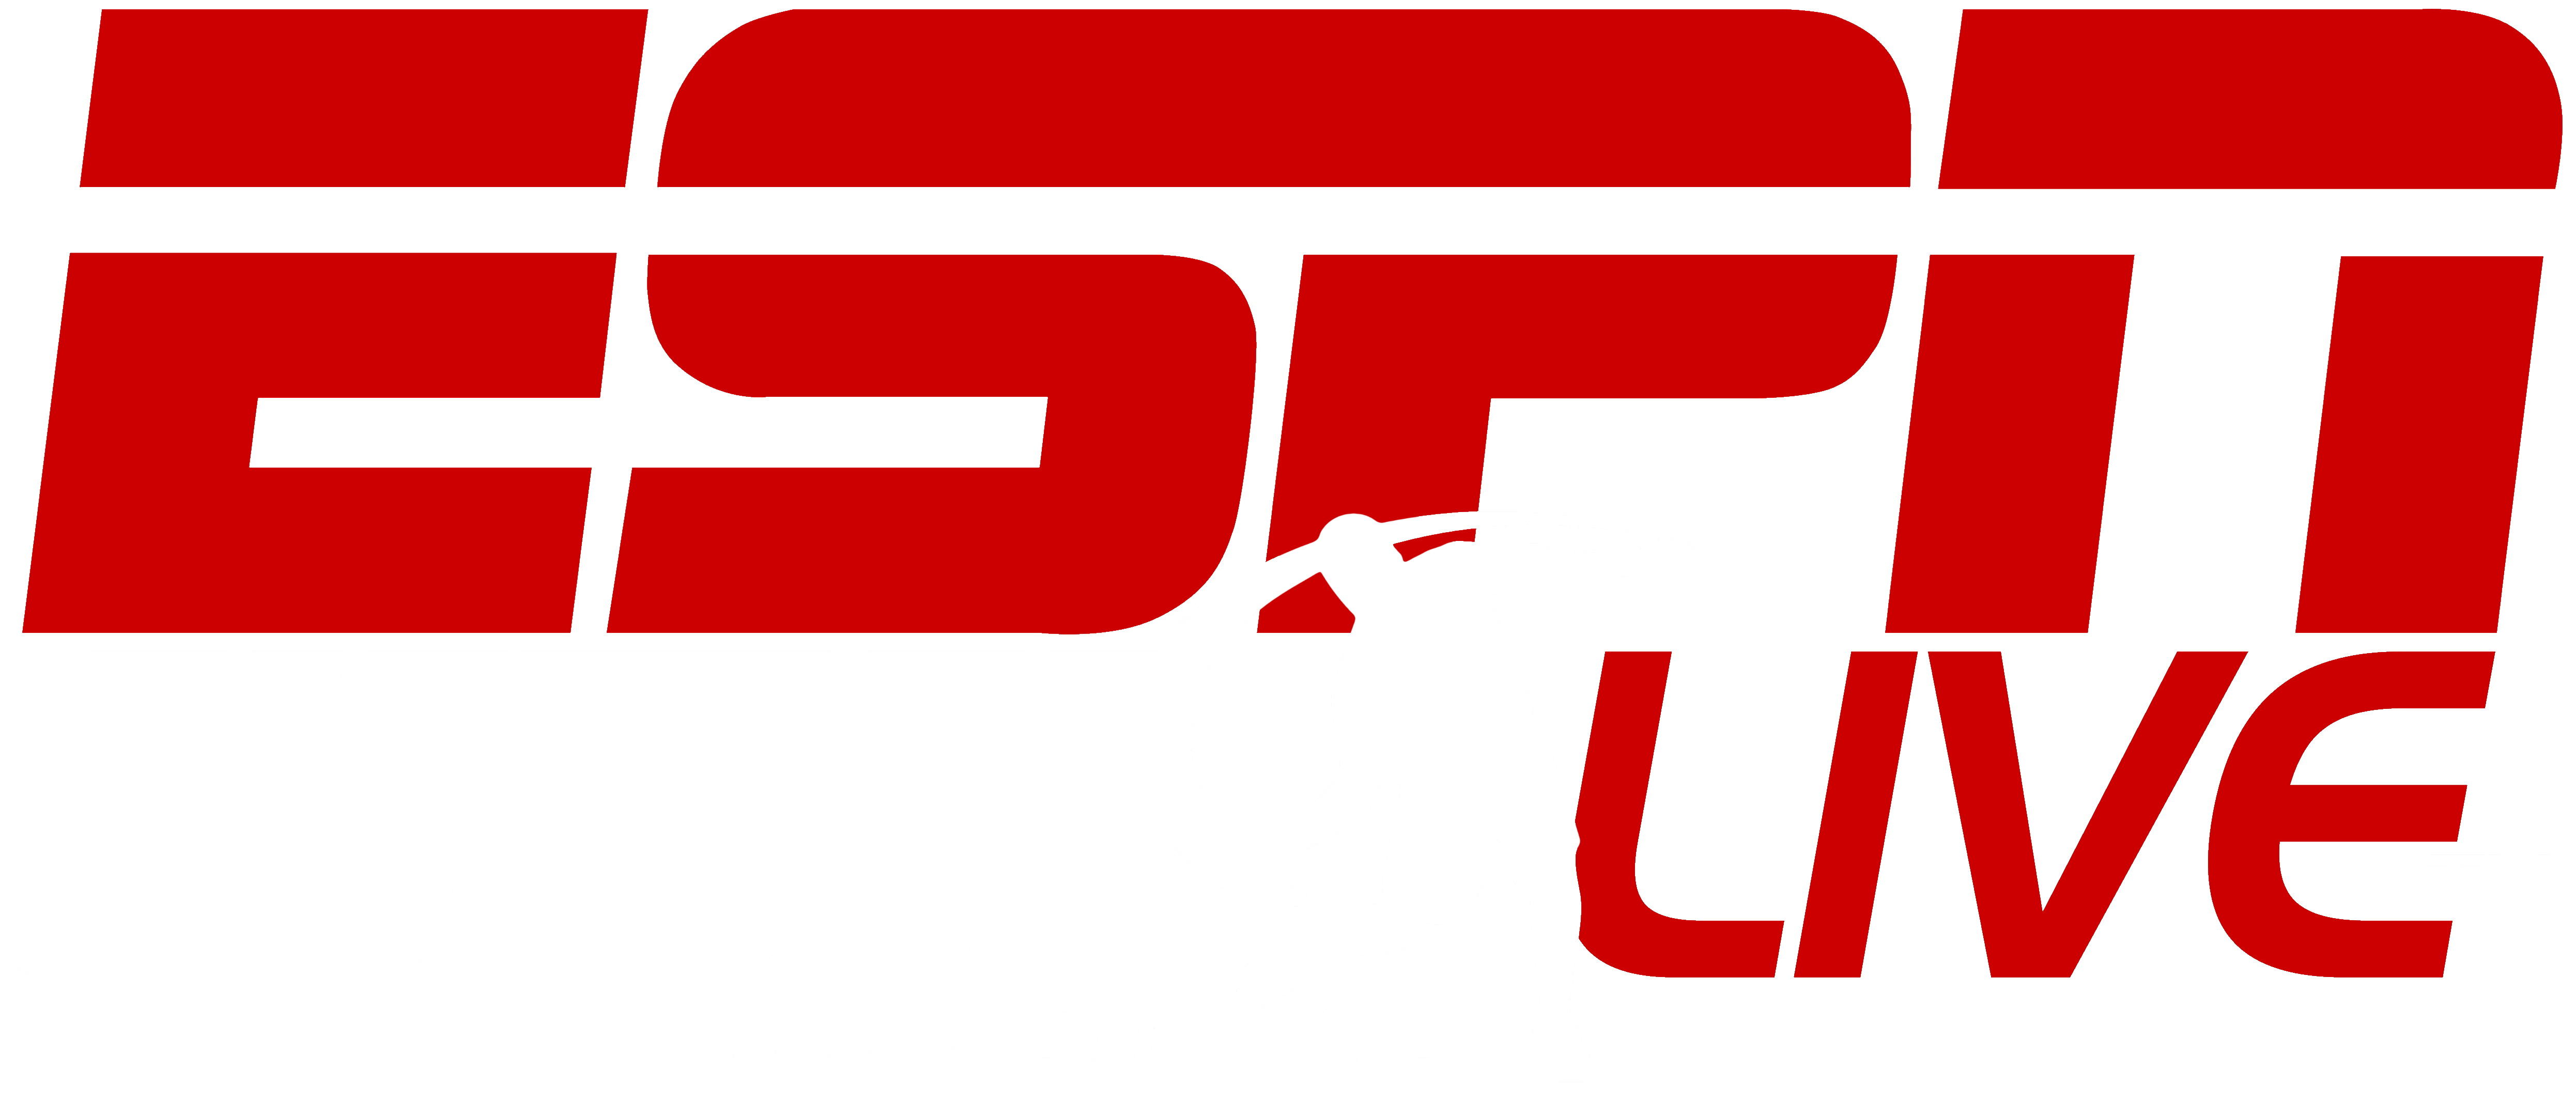 Media Overview | WPHLiveTV